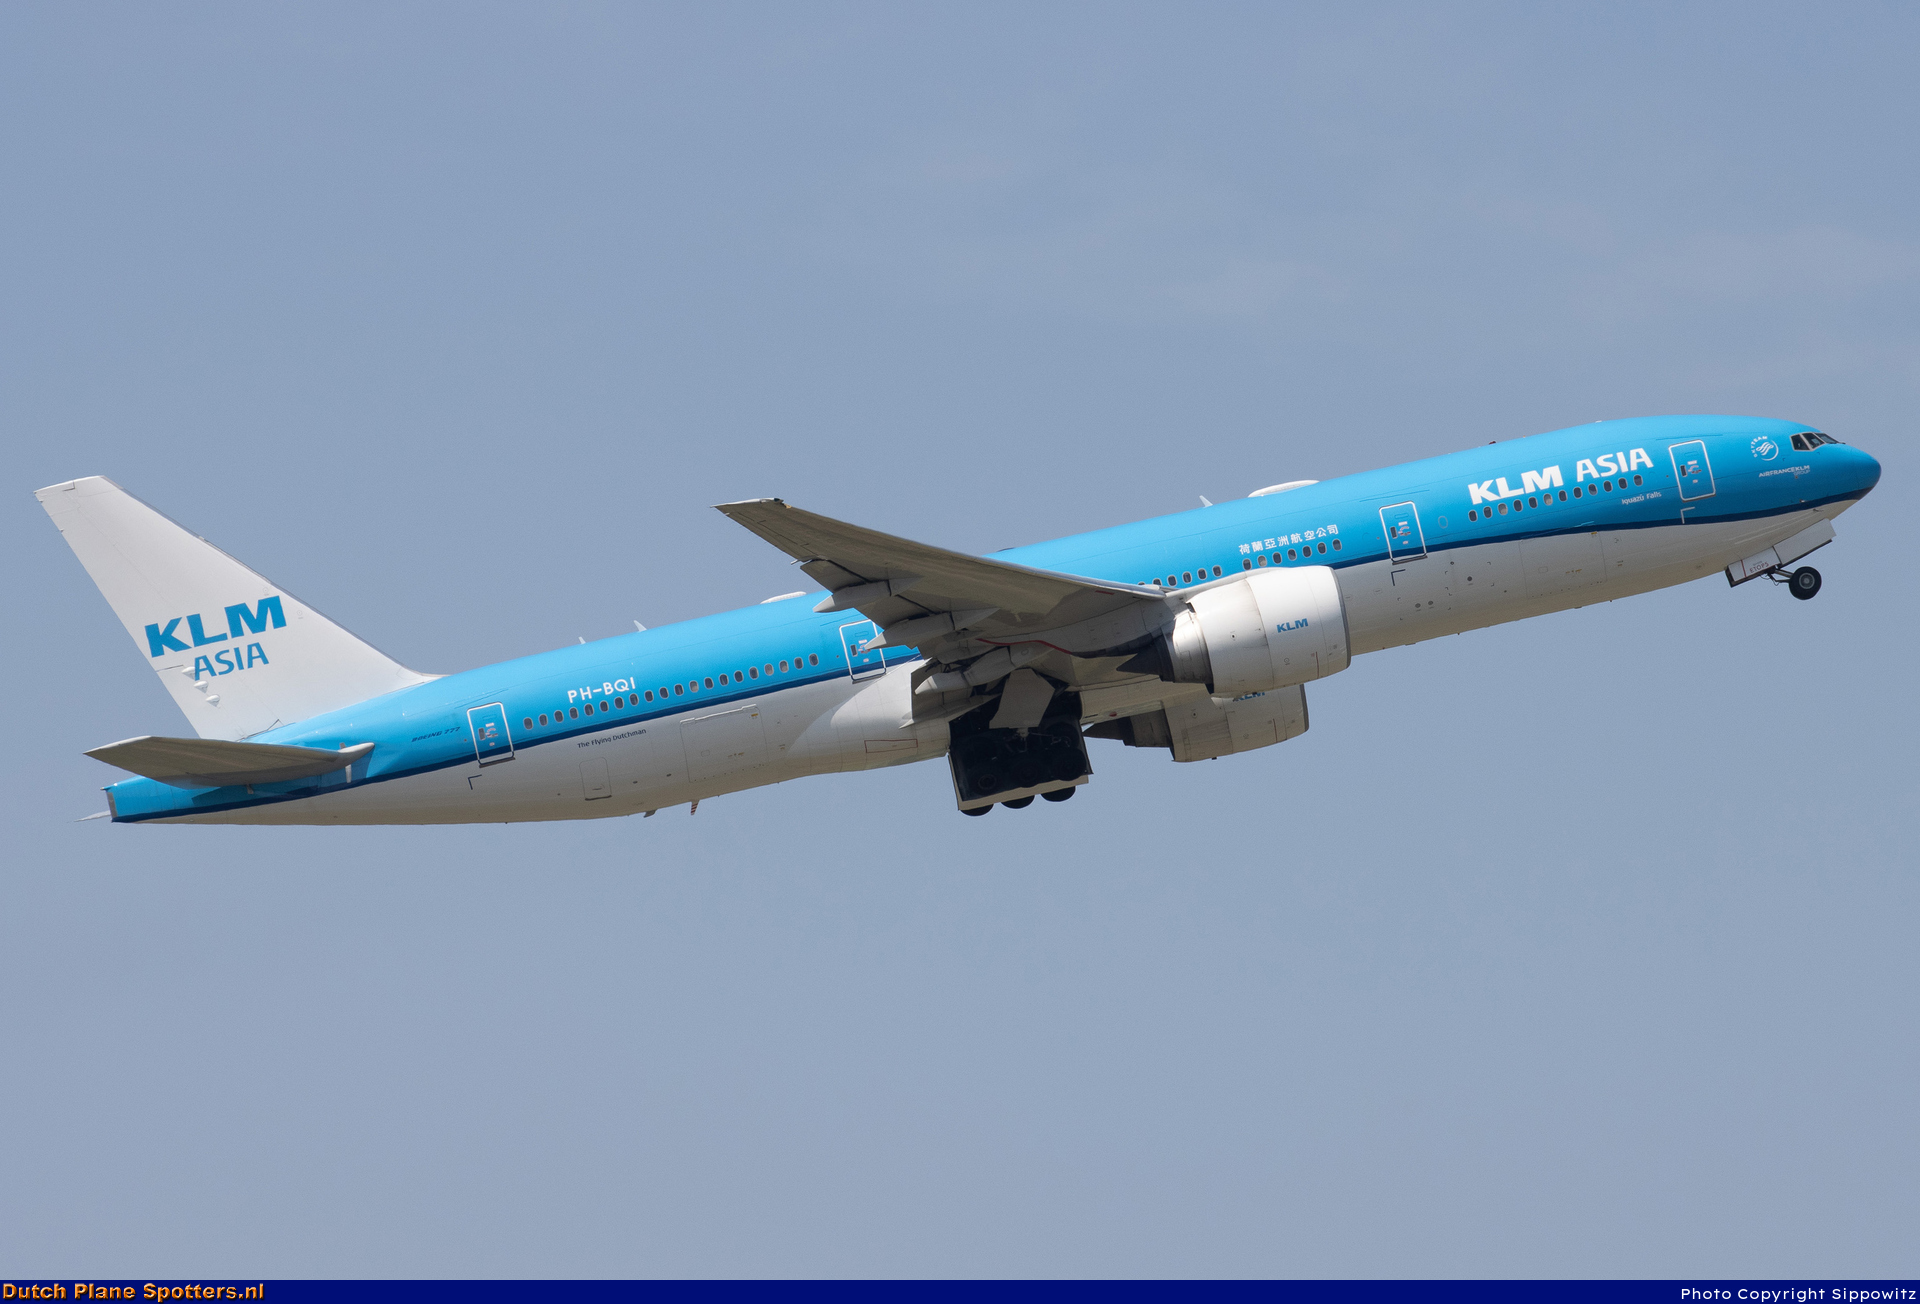 PH-BQI Boeing 777-200 KLM Asia by Sippowitz